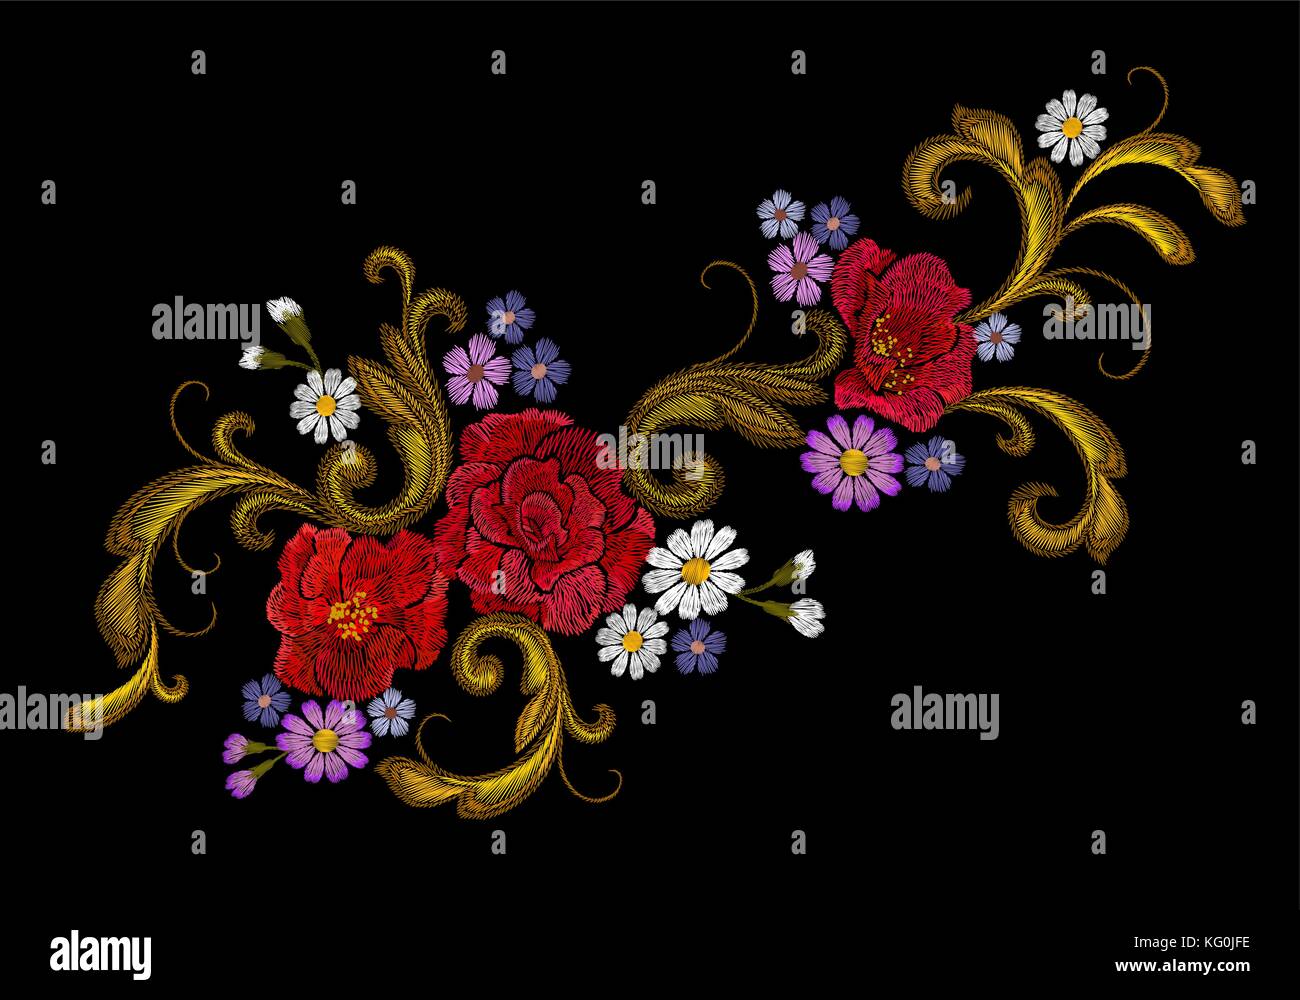 Realistic vector embroidery fashion patch. Flower rose daisy golden leaves vintage victorian baroque design. Stitch texture floral arrangement clothes decoration illustration Stock Vector